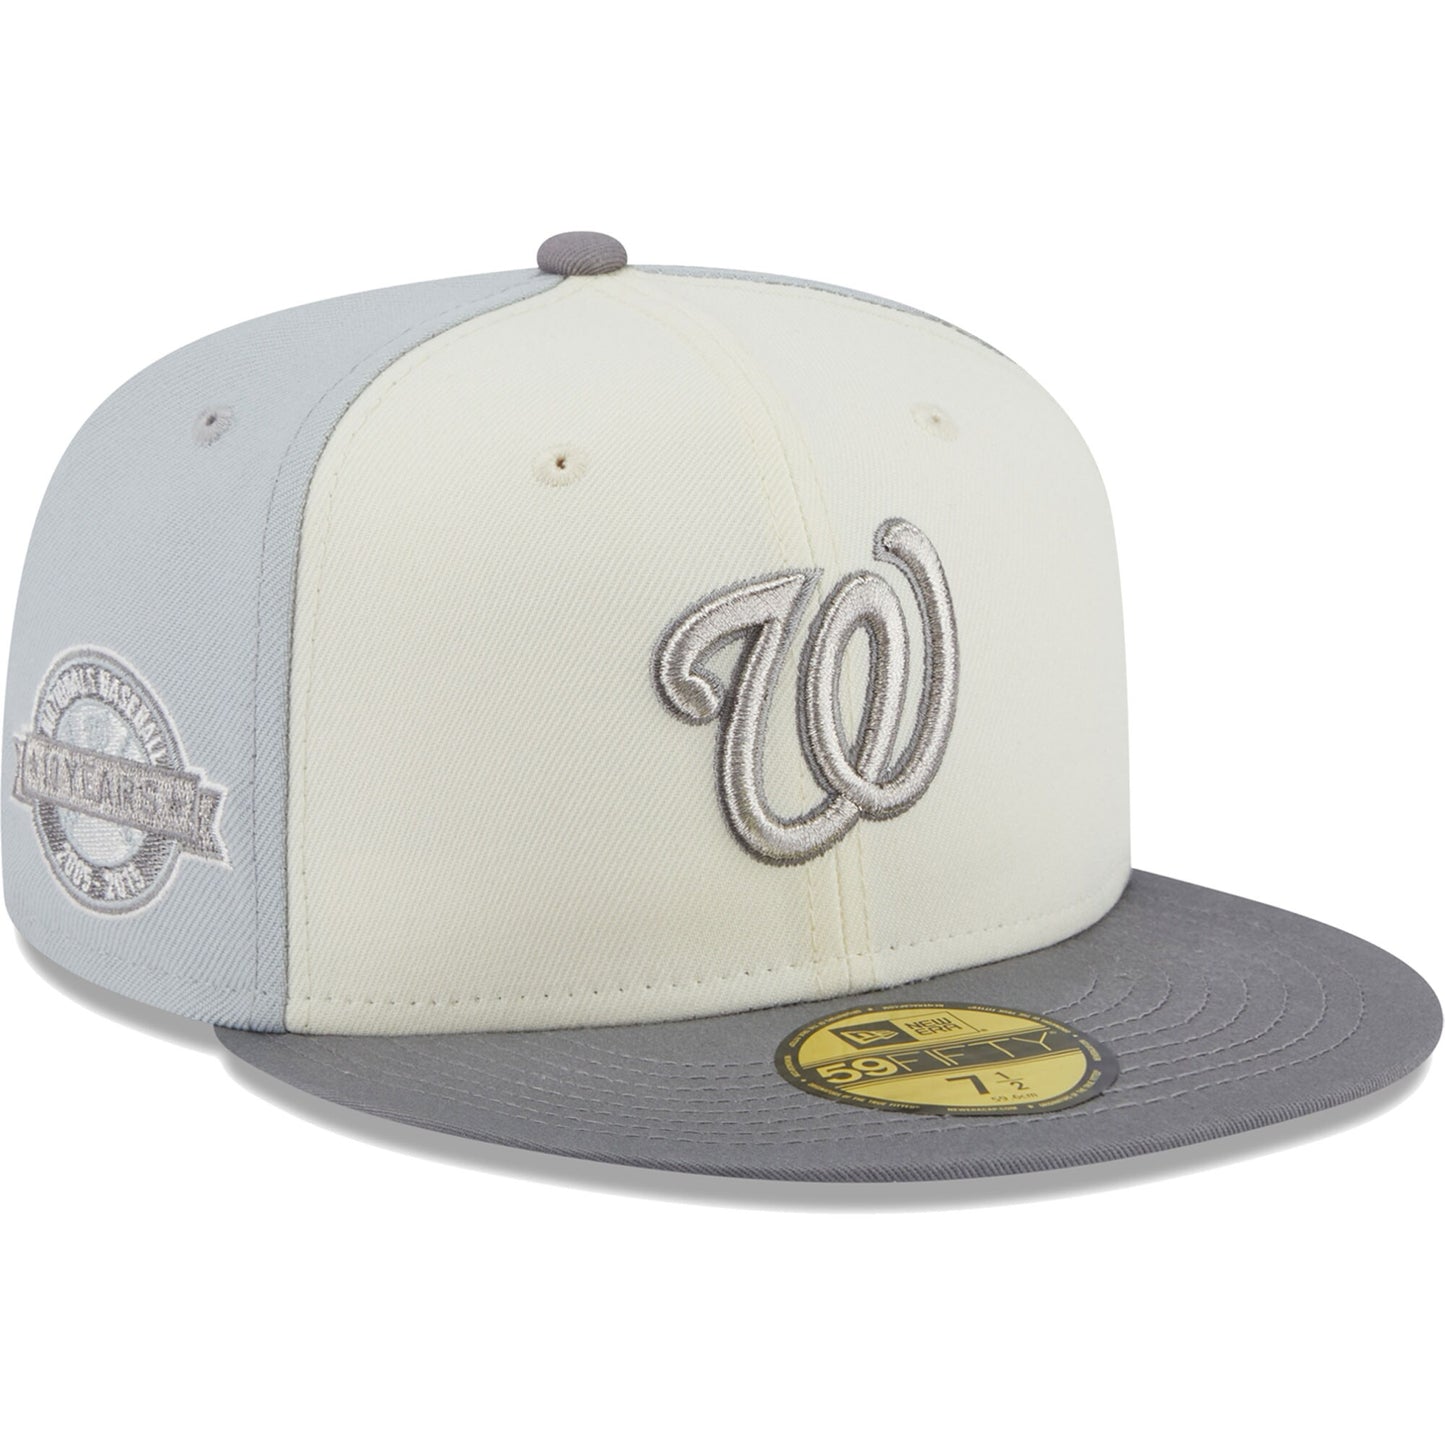 Washington Nationals New Era Chrome Anniversary 59FIFTY Fitted Hat - Cream/Gray